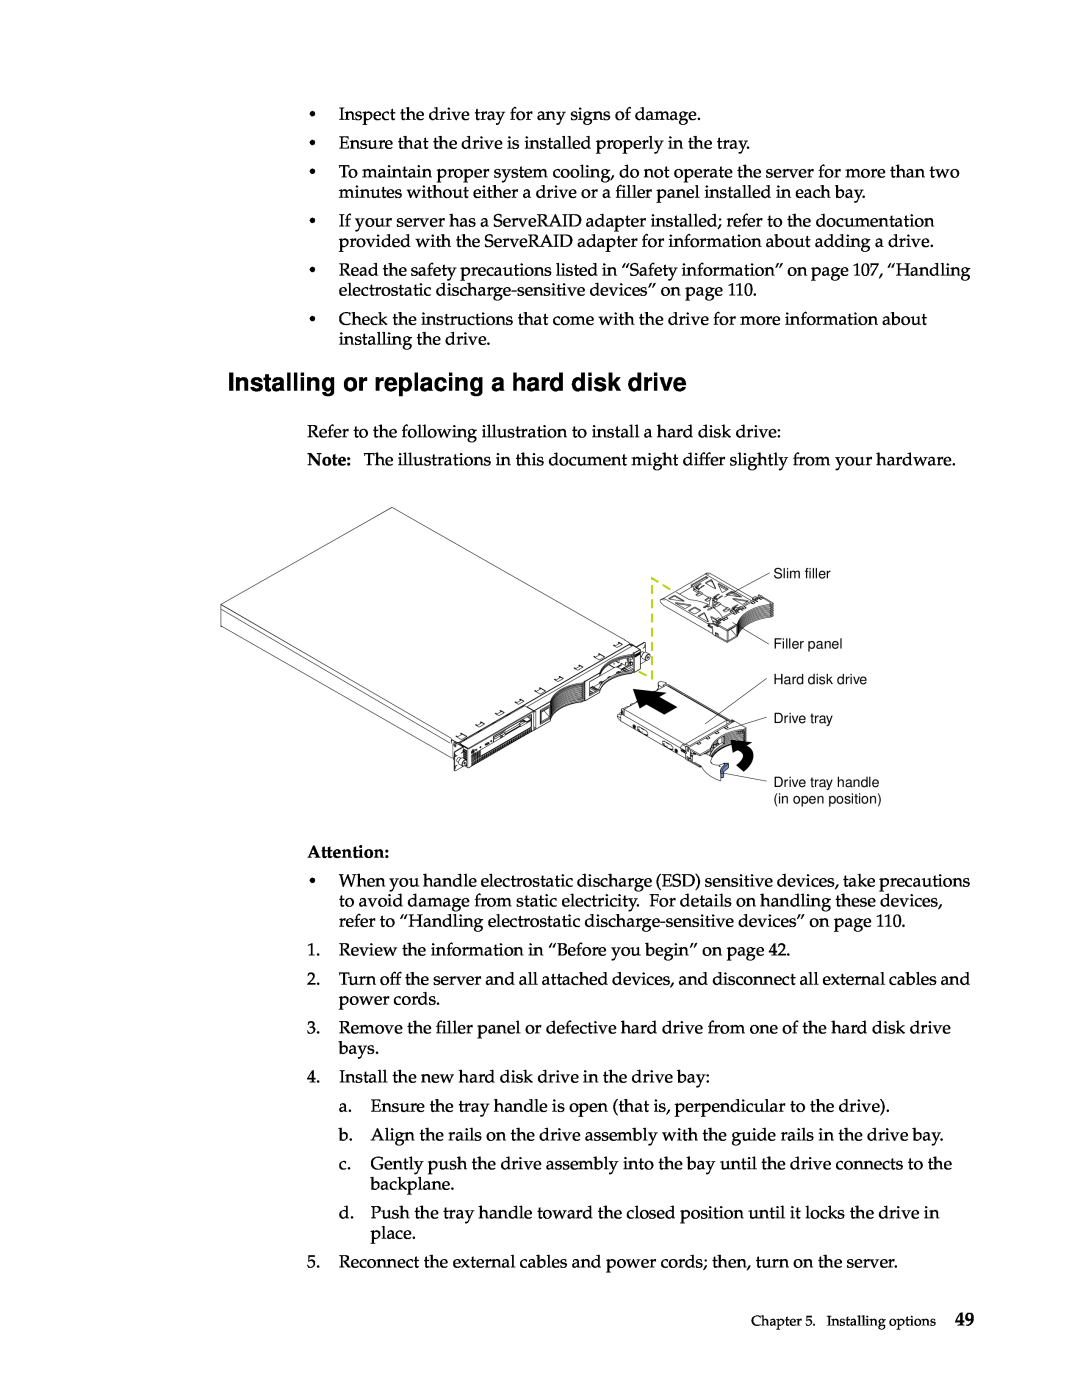 IBM xSeries 330 manual Installing or replacing a hard disk drive 